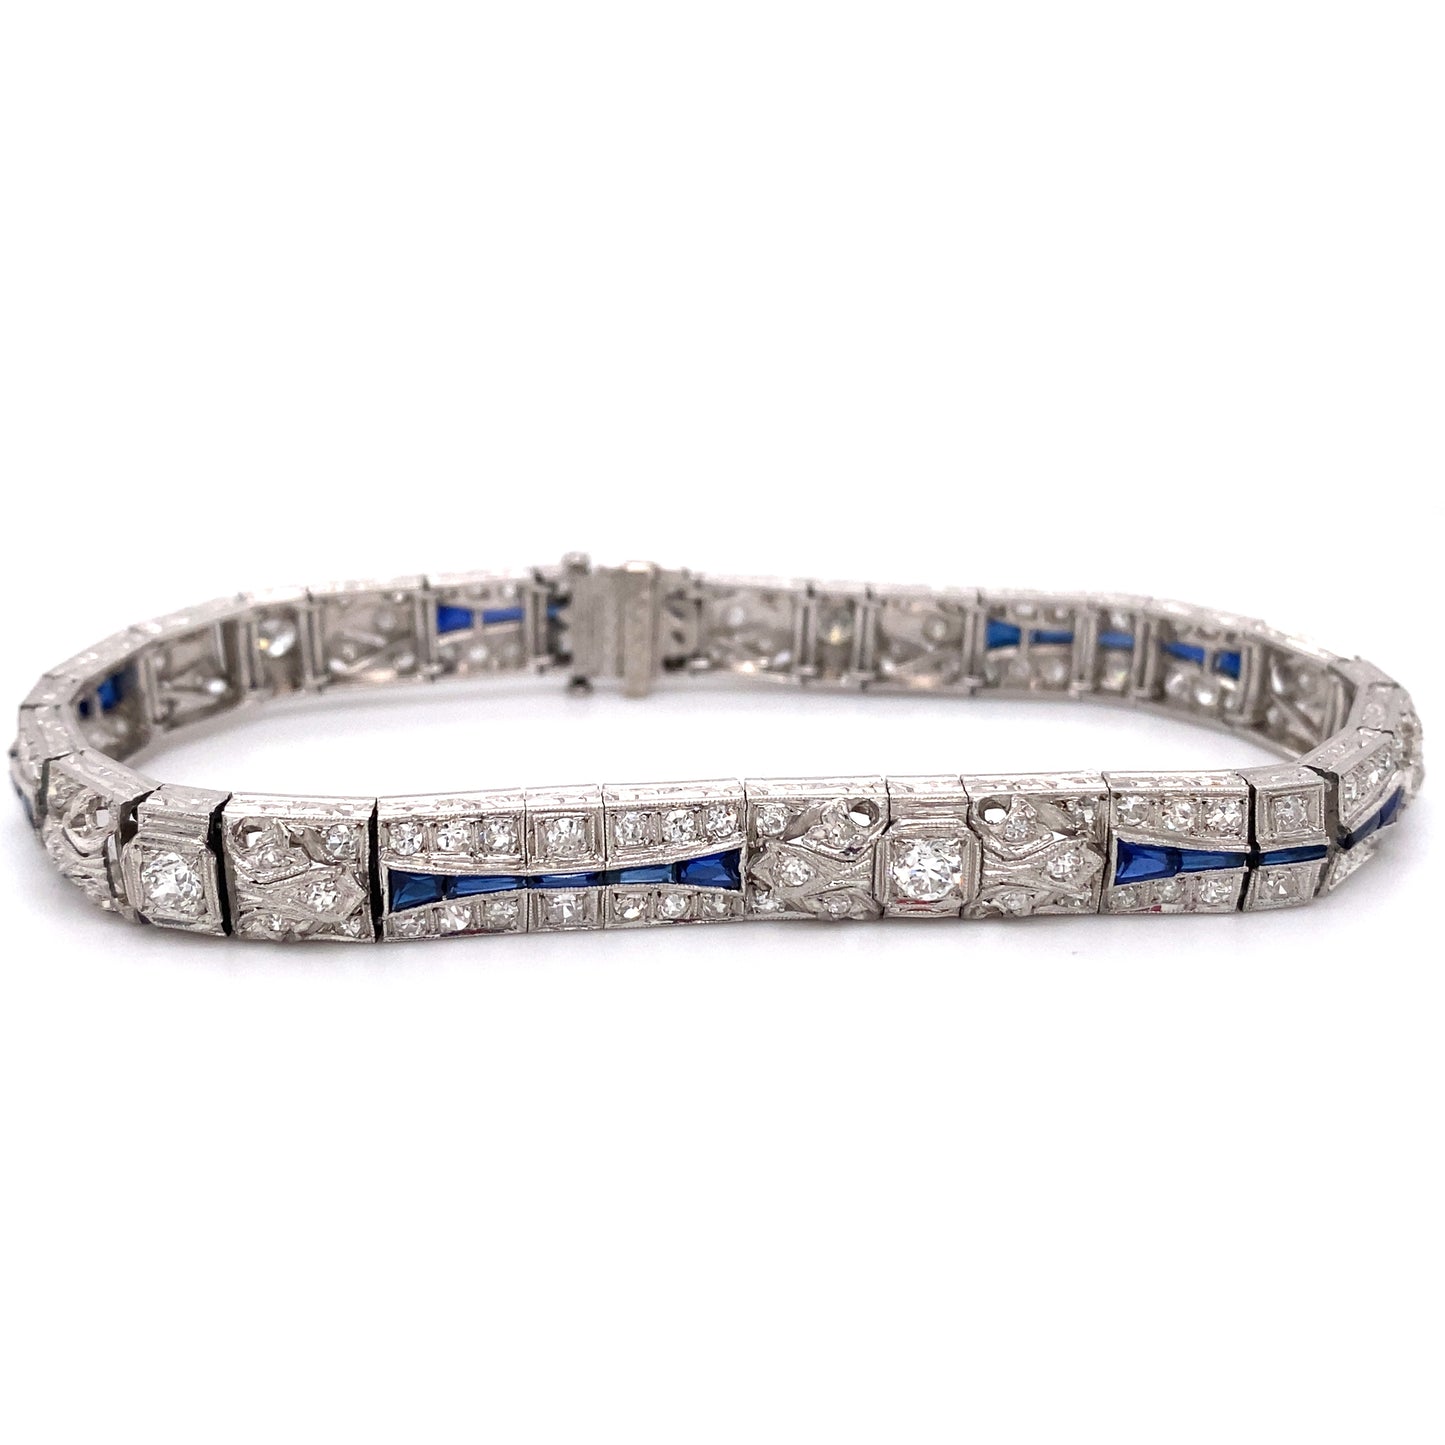 Circa 1910 Art Deco 5.0 Carat Diamond and Sapphire Bracelet in Platinum